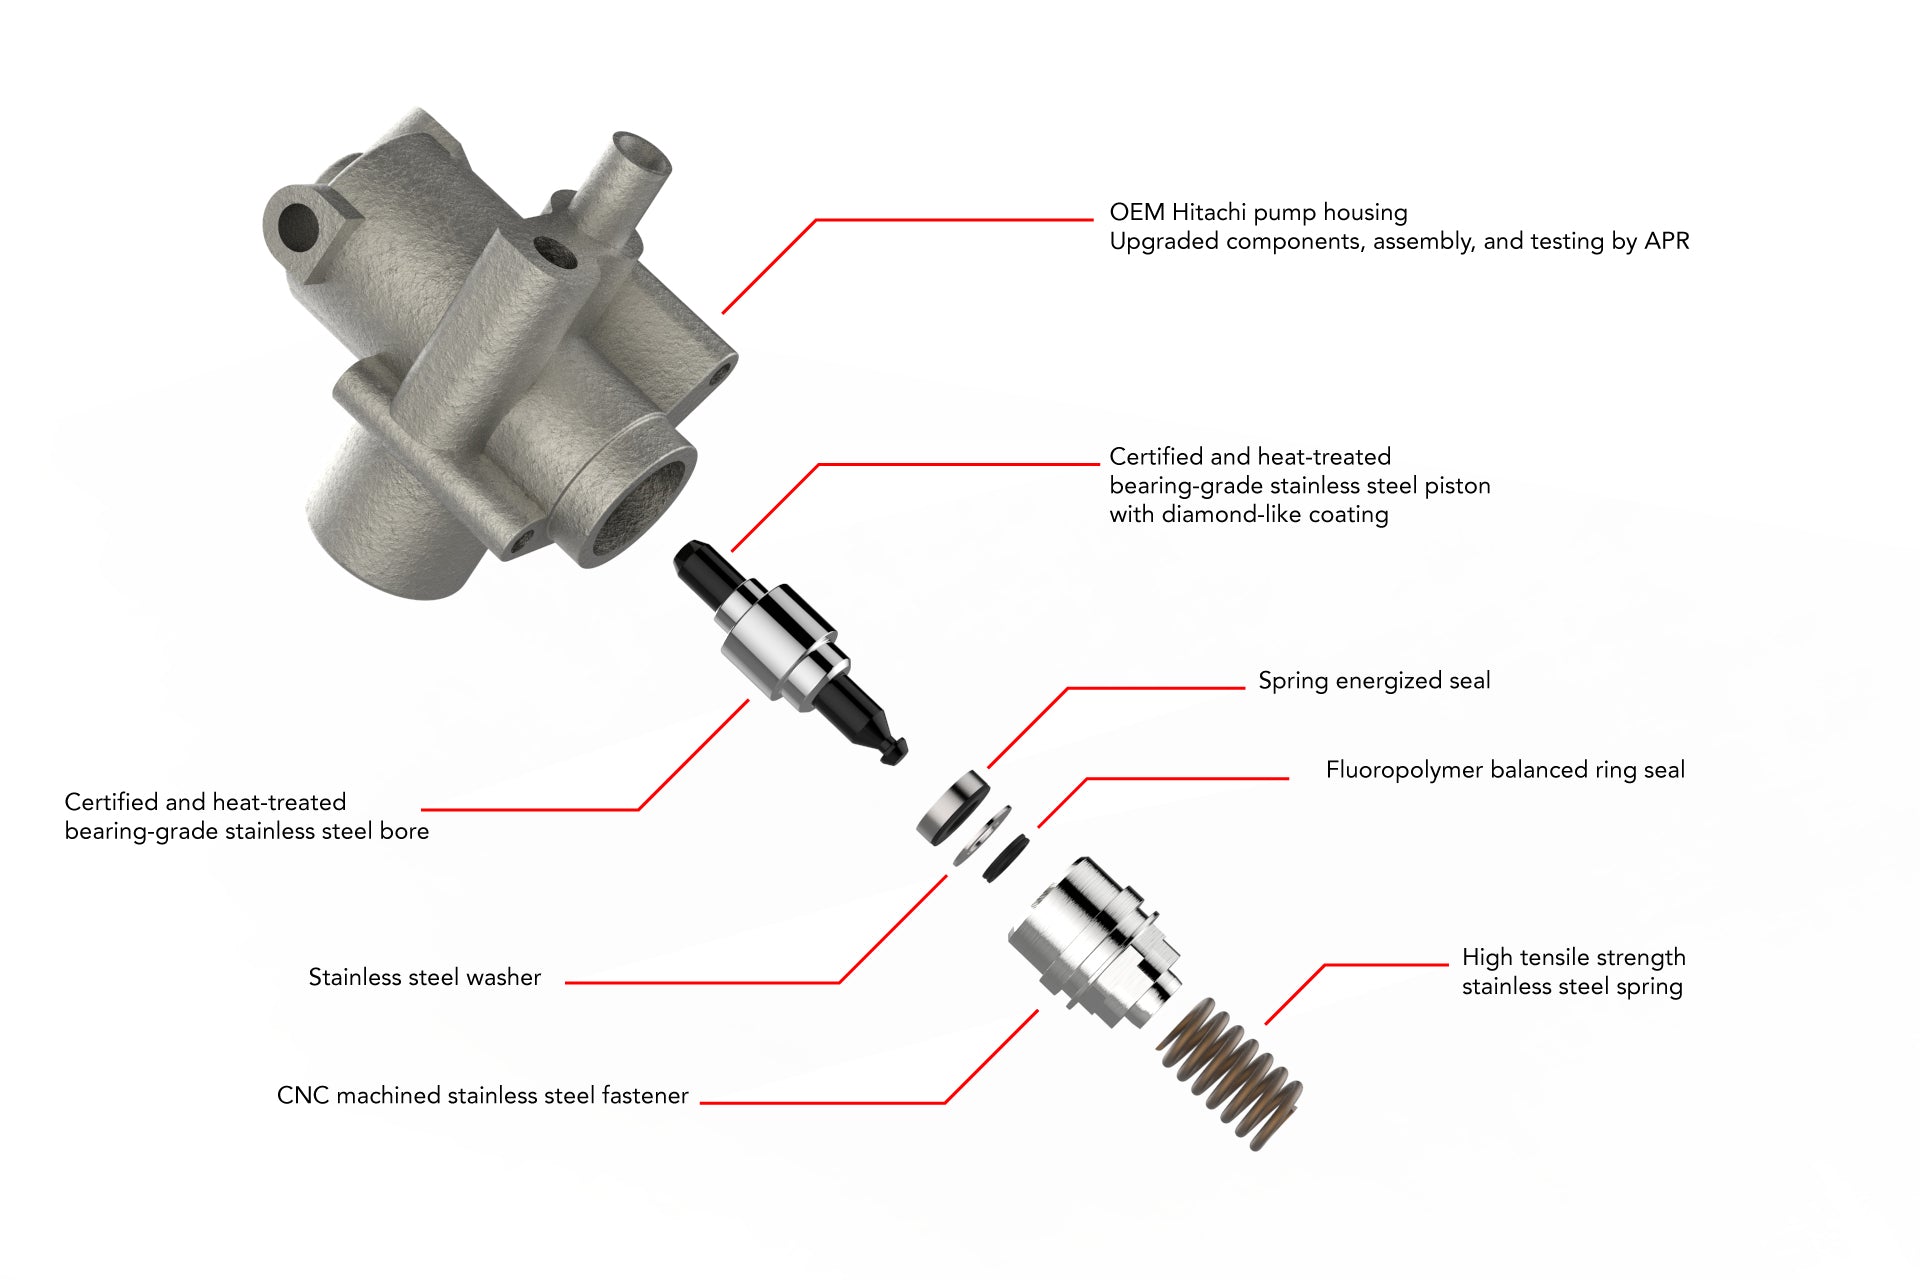 APR Direct Injection Fuel Pump